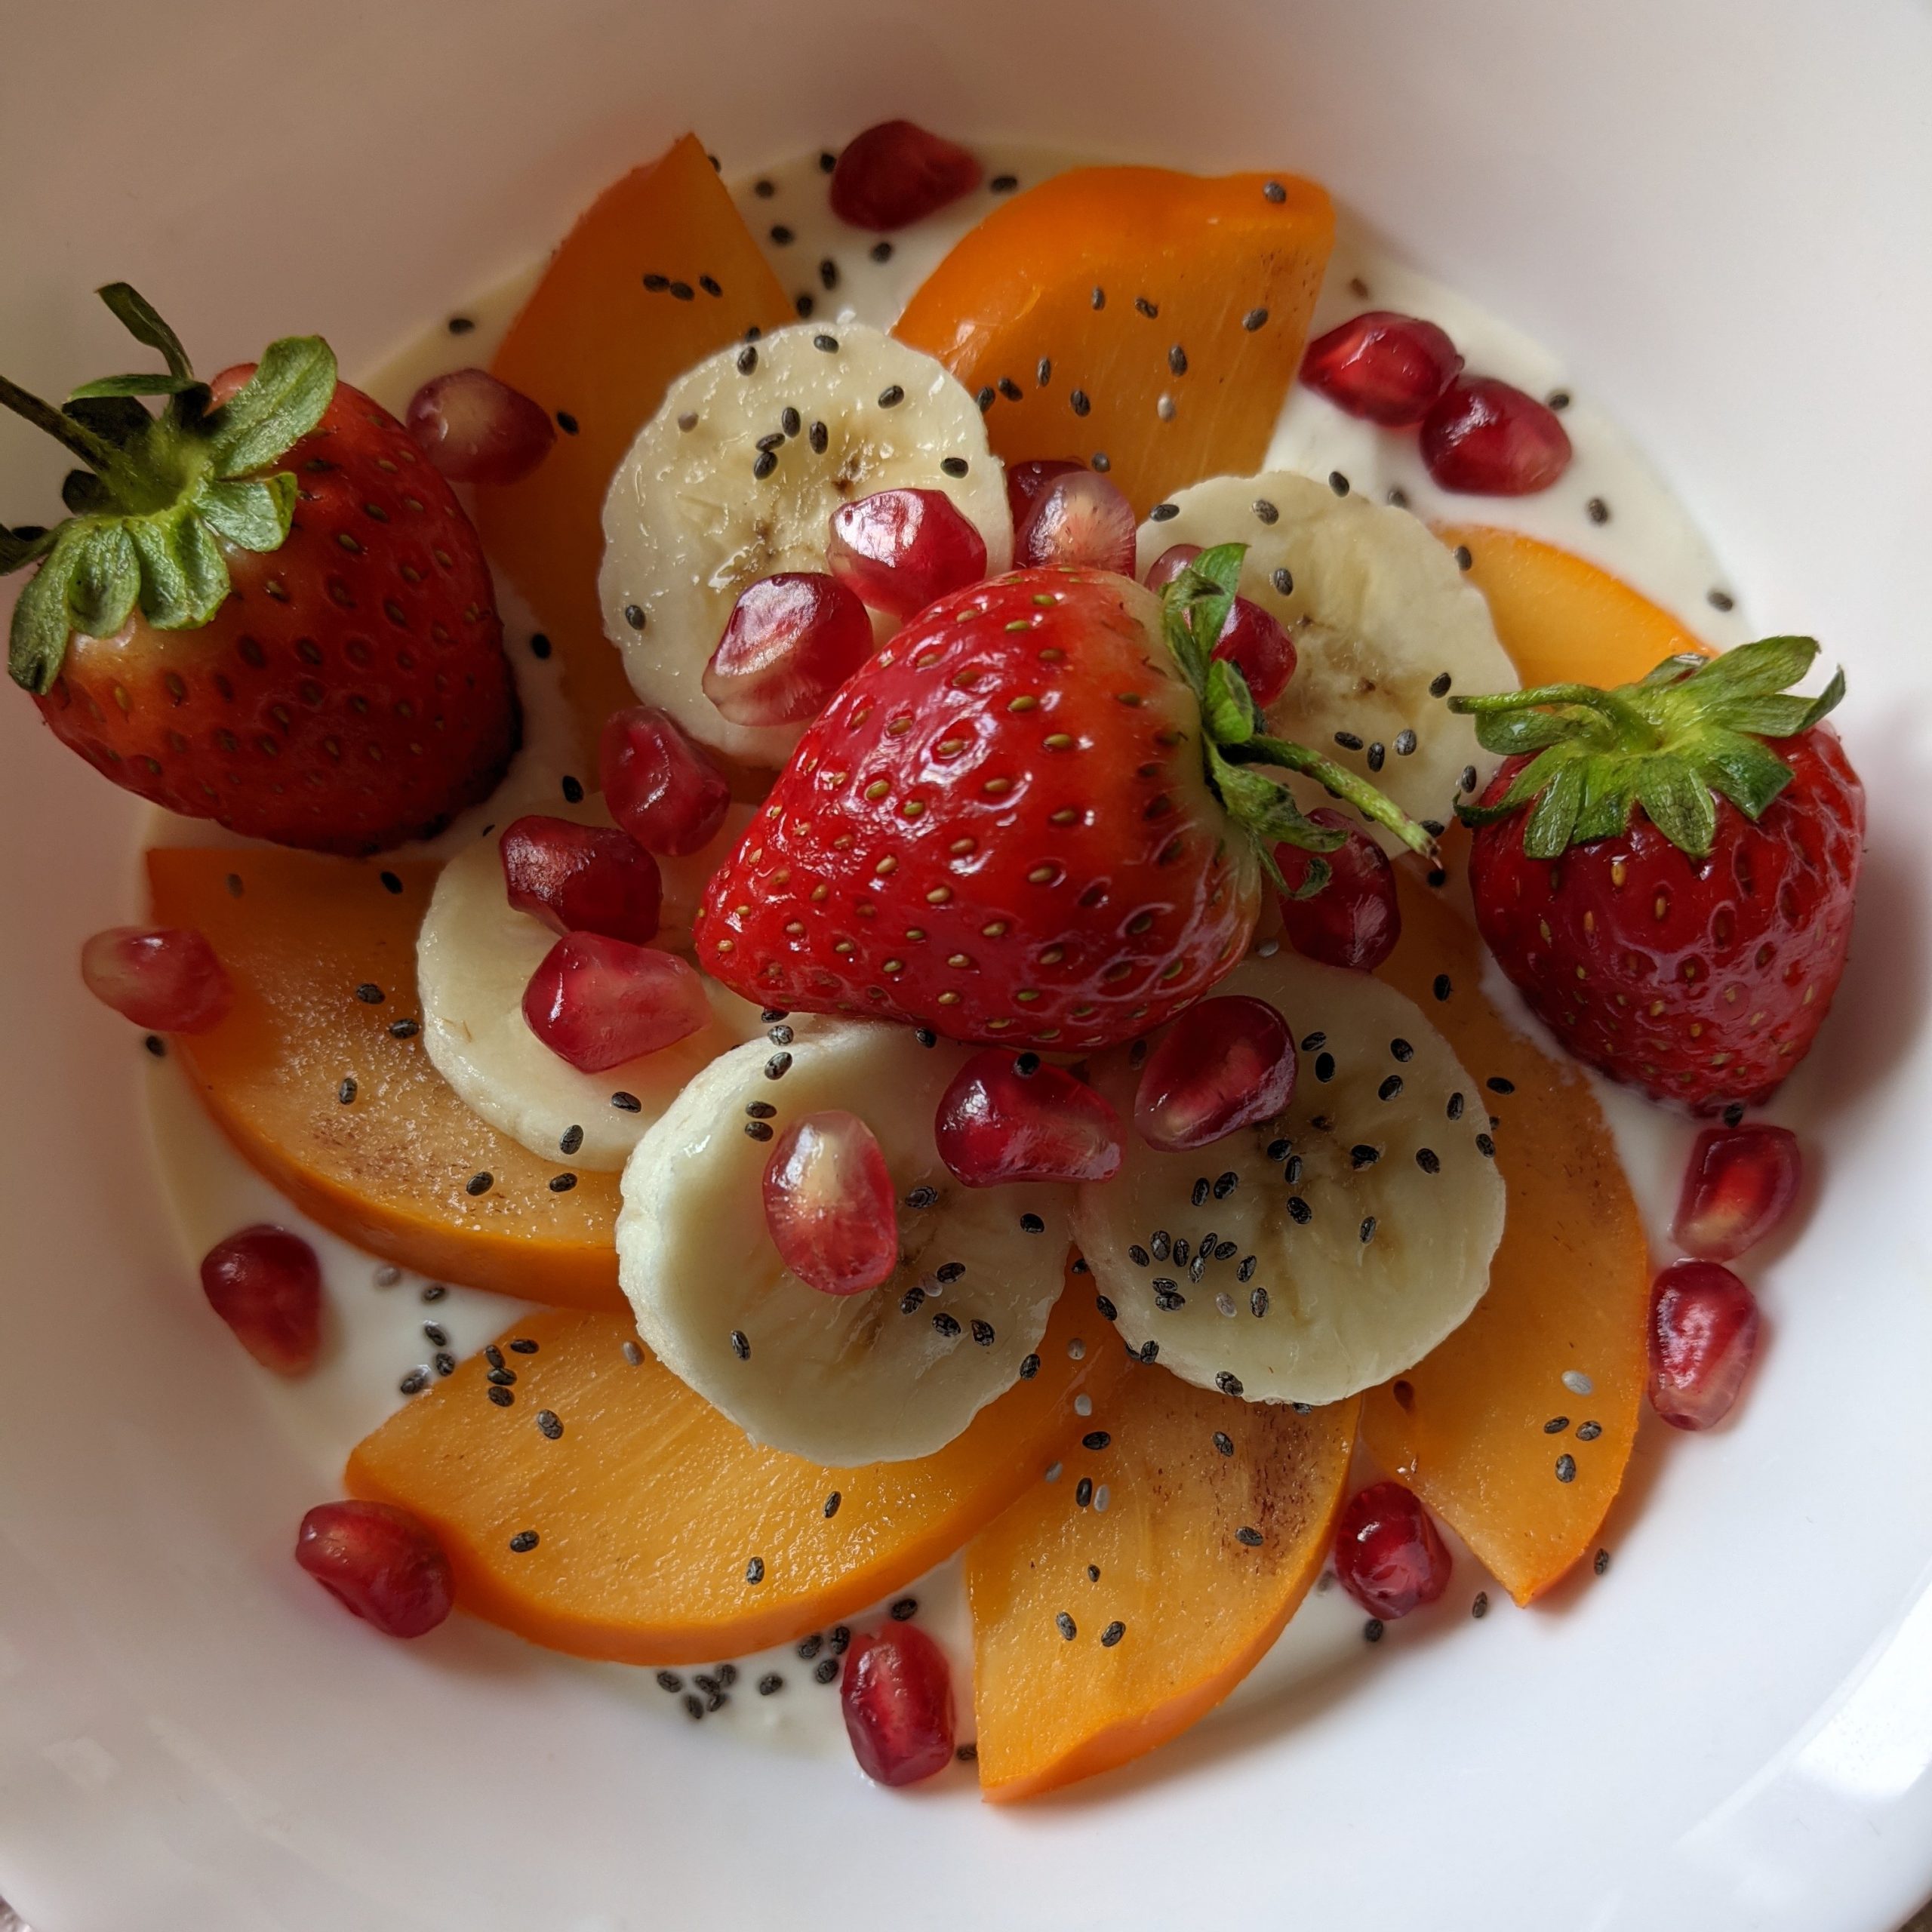 Breakfast-Yoghurt-Bowl-Recipe-with-Persimmon-Strawberries-Banana-Pomegranate-Arils-Chia-Seeds-Vanilla-Yoghurt-Recipe